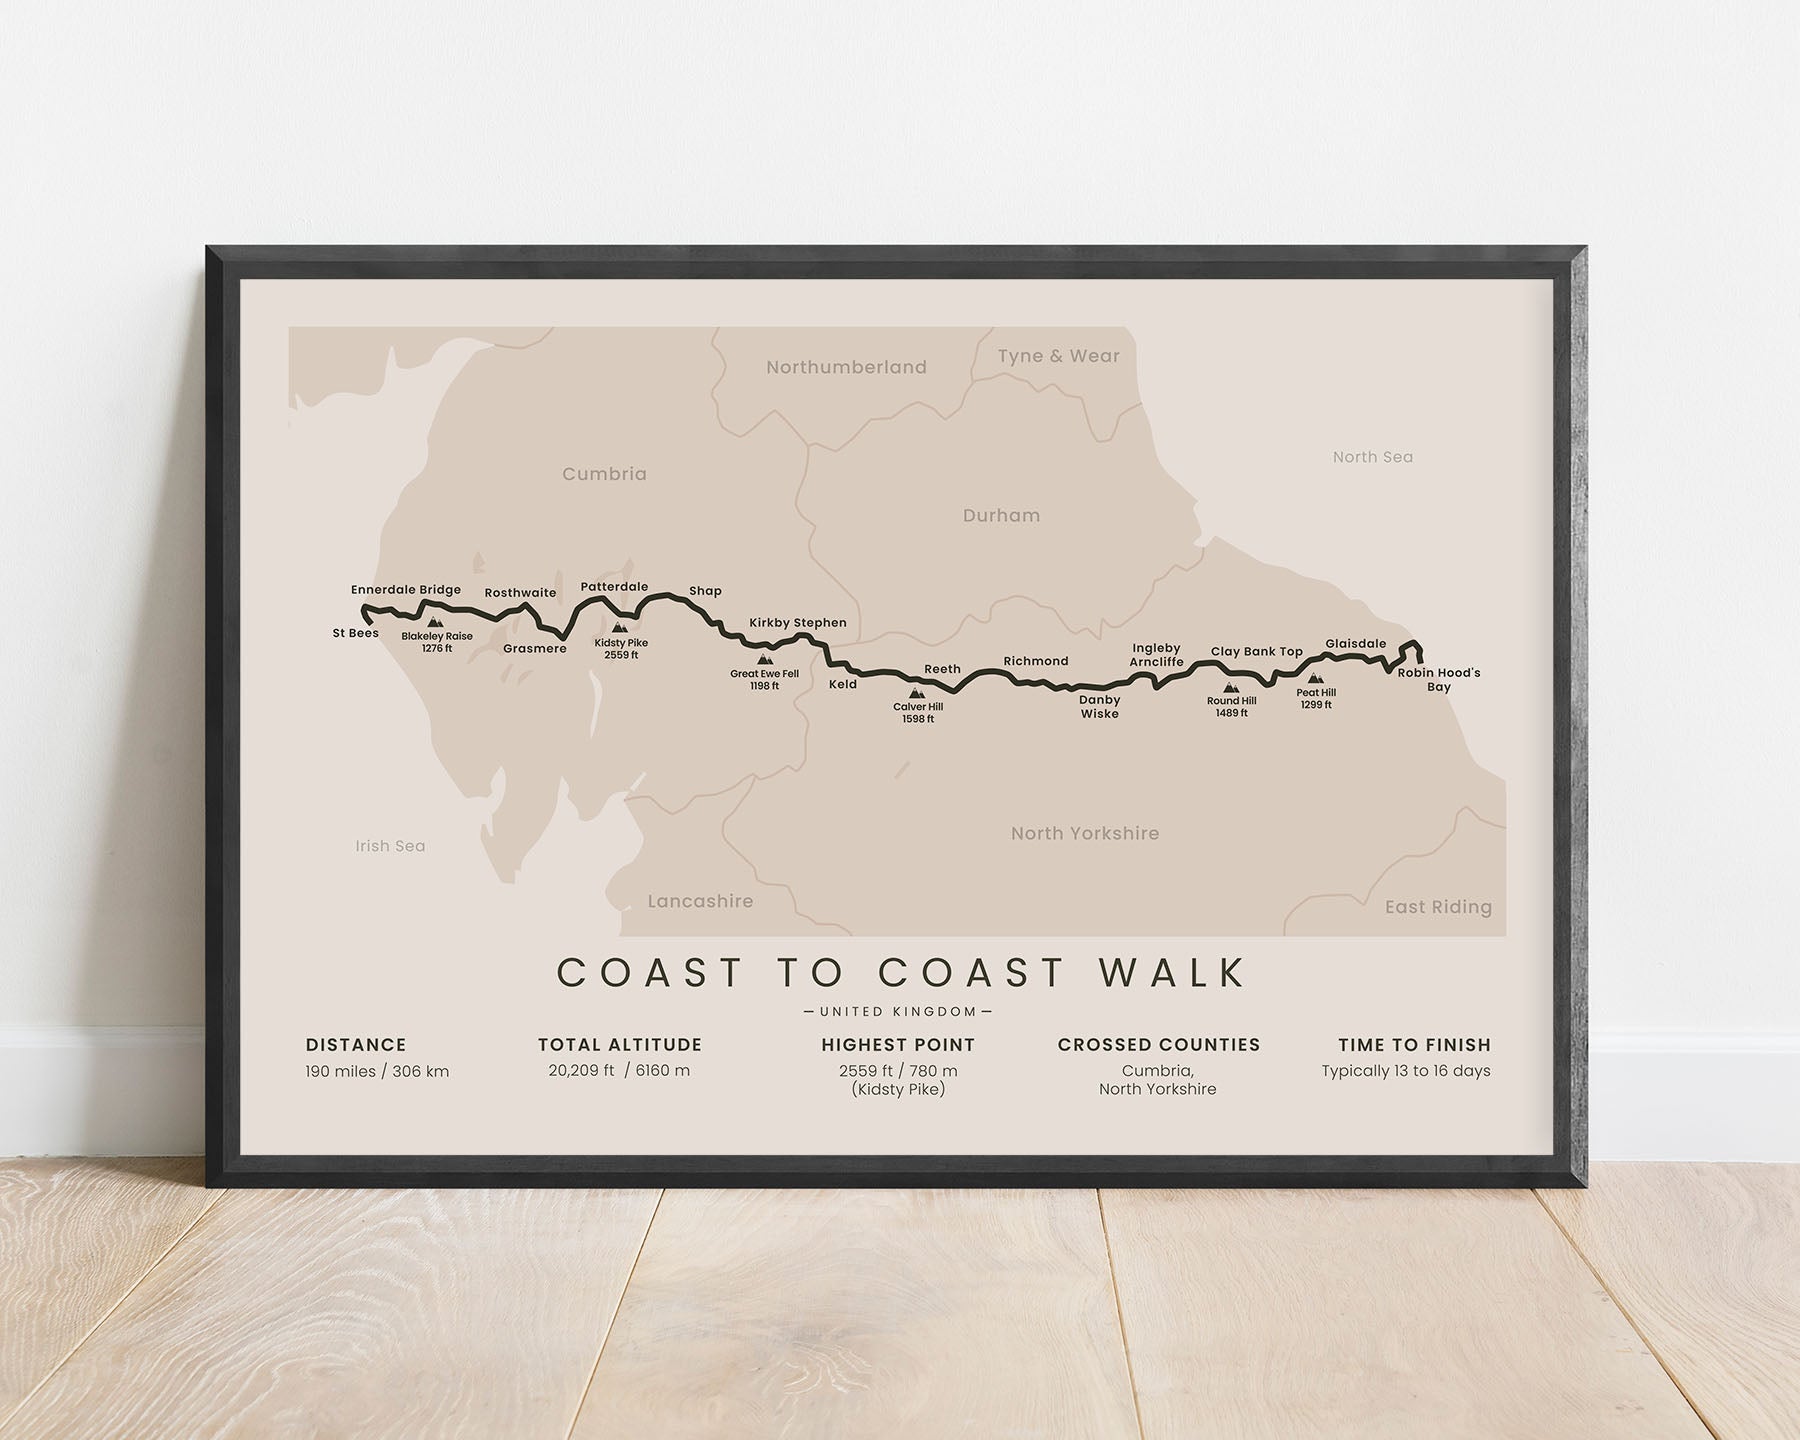 Wainwright's Coast to Coast Walk (Cumbria) trail print with beige background.